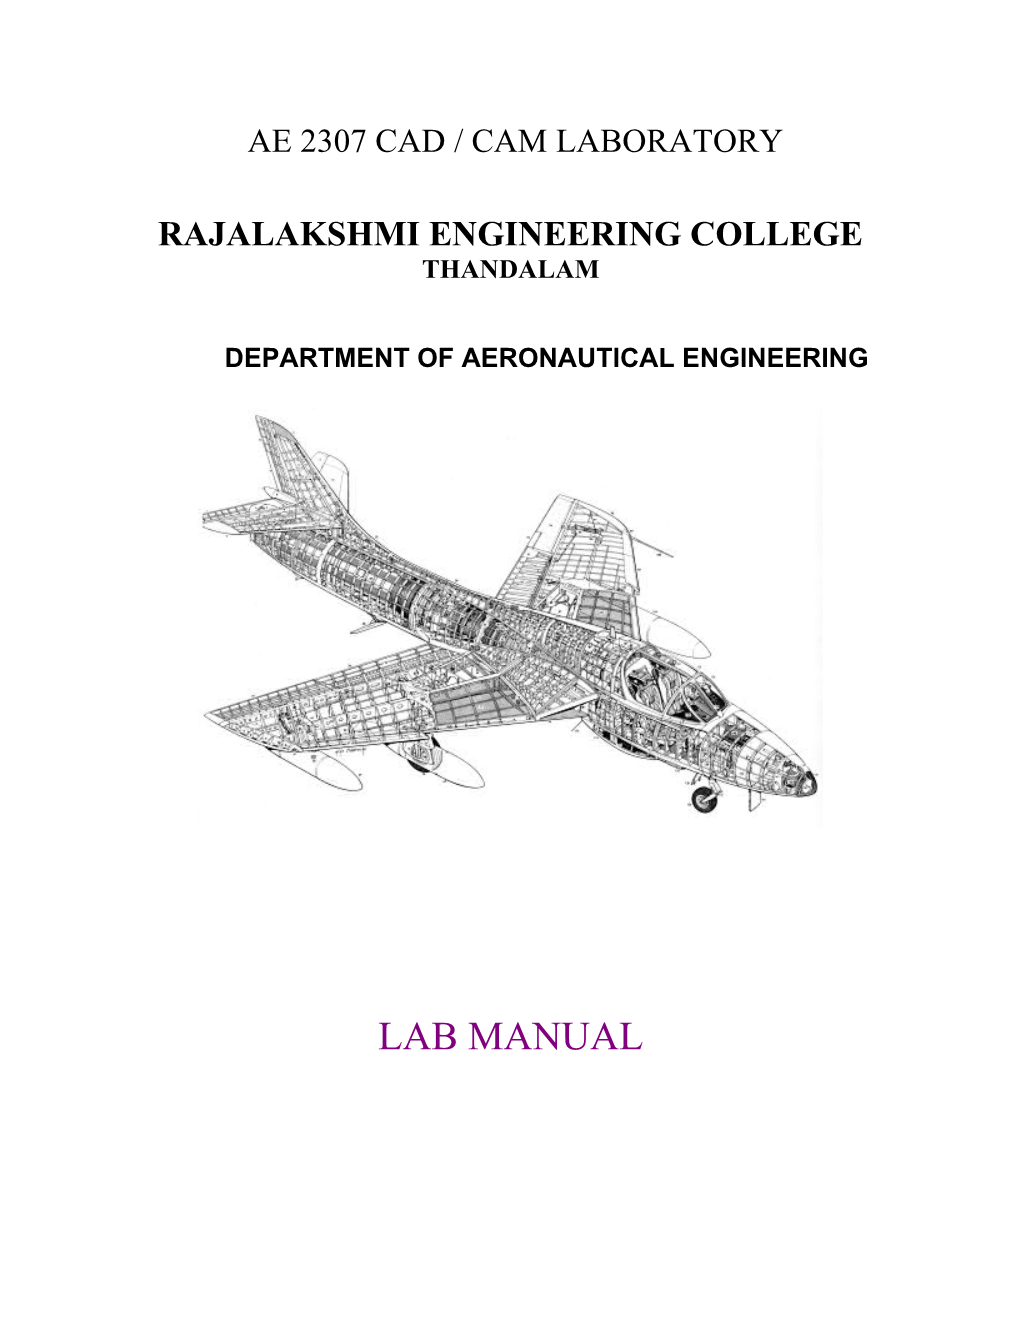 Department of Aeronautical Engineering